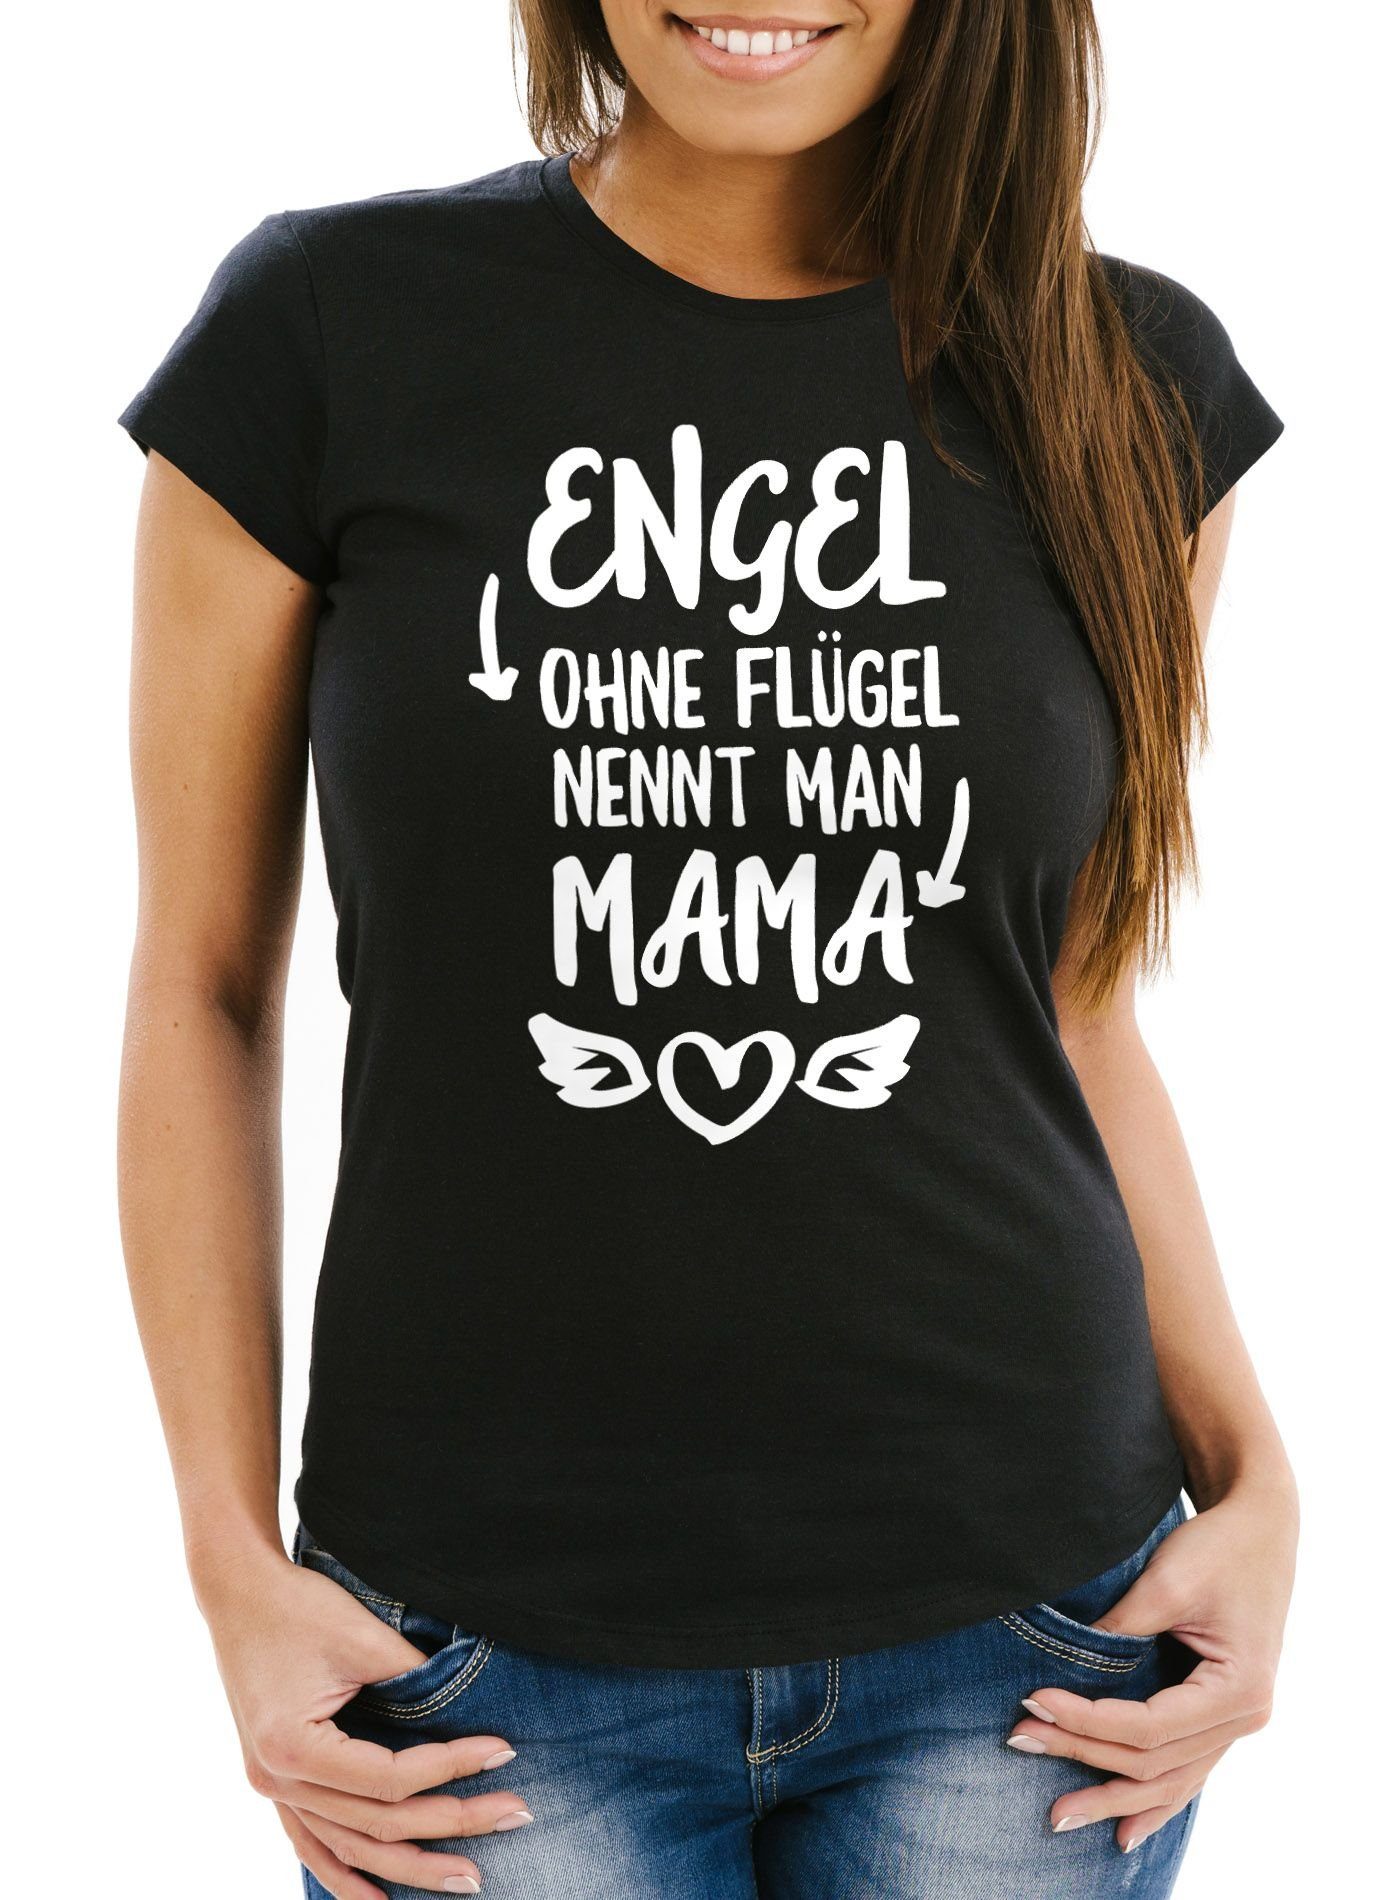 MoonWorks Print-Shirt Damen T-Shirt Flügel Print mit Moonworks® Fit man Mama ohne nennt Engel schwarz Slim